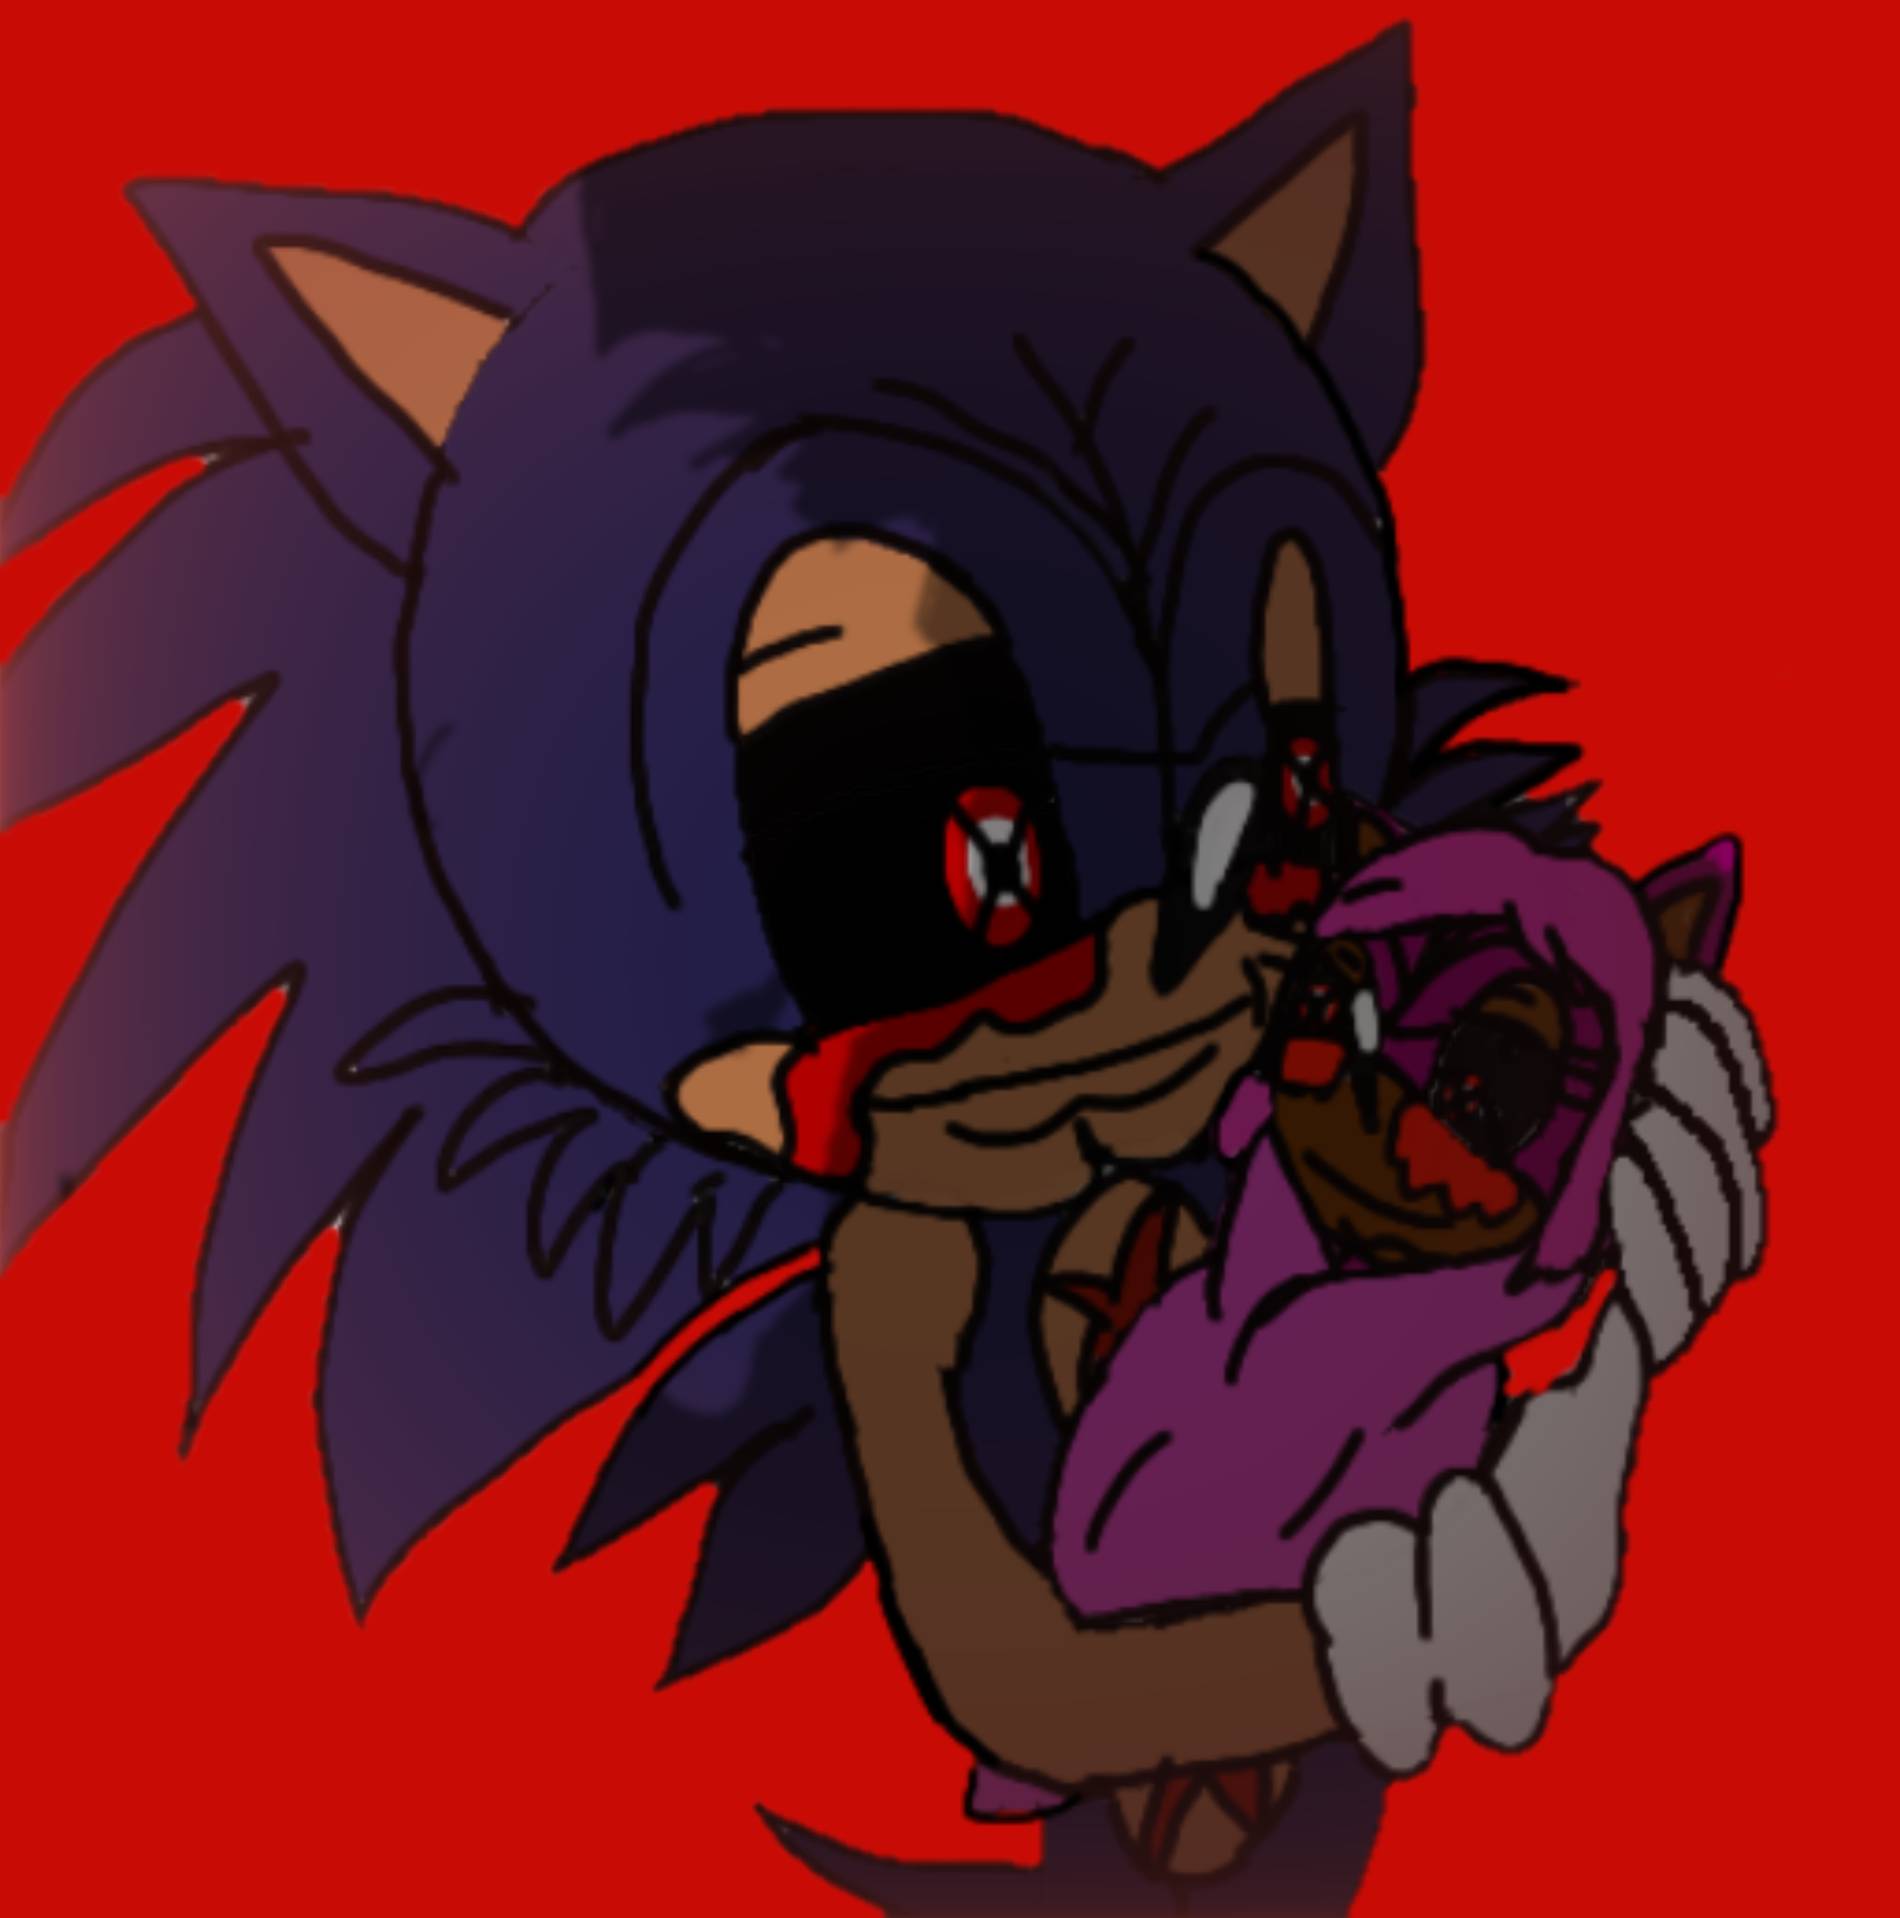 I love lord x 👉👈 💓💕💞  Hedgehog art, Character art, Cartoon